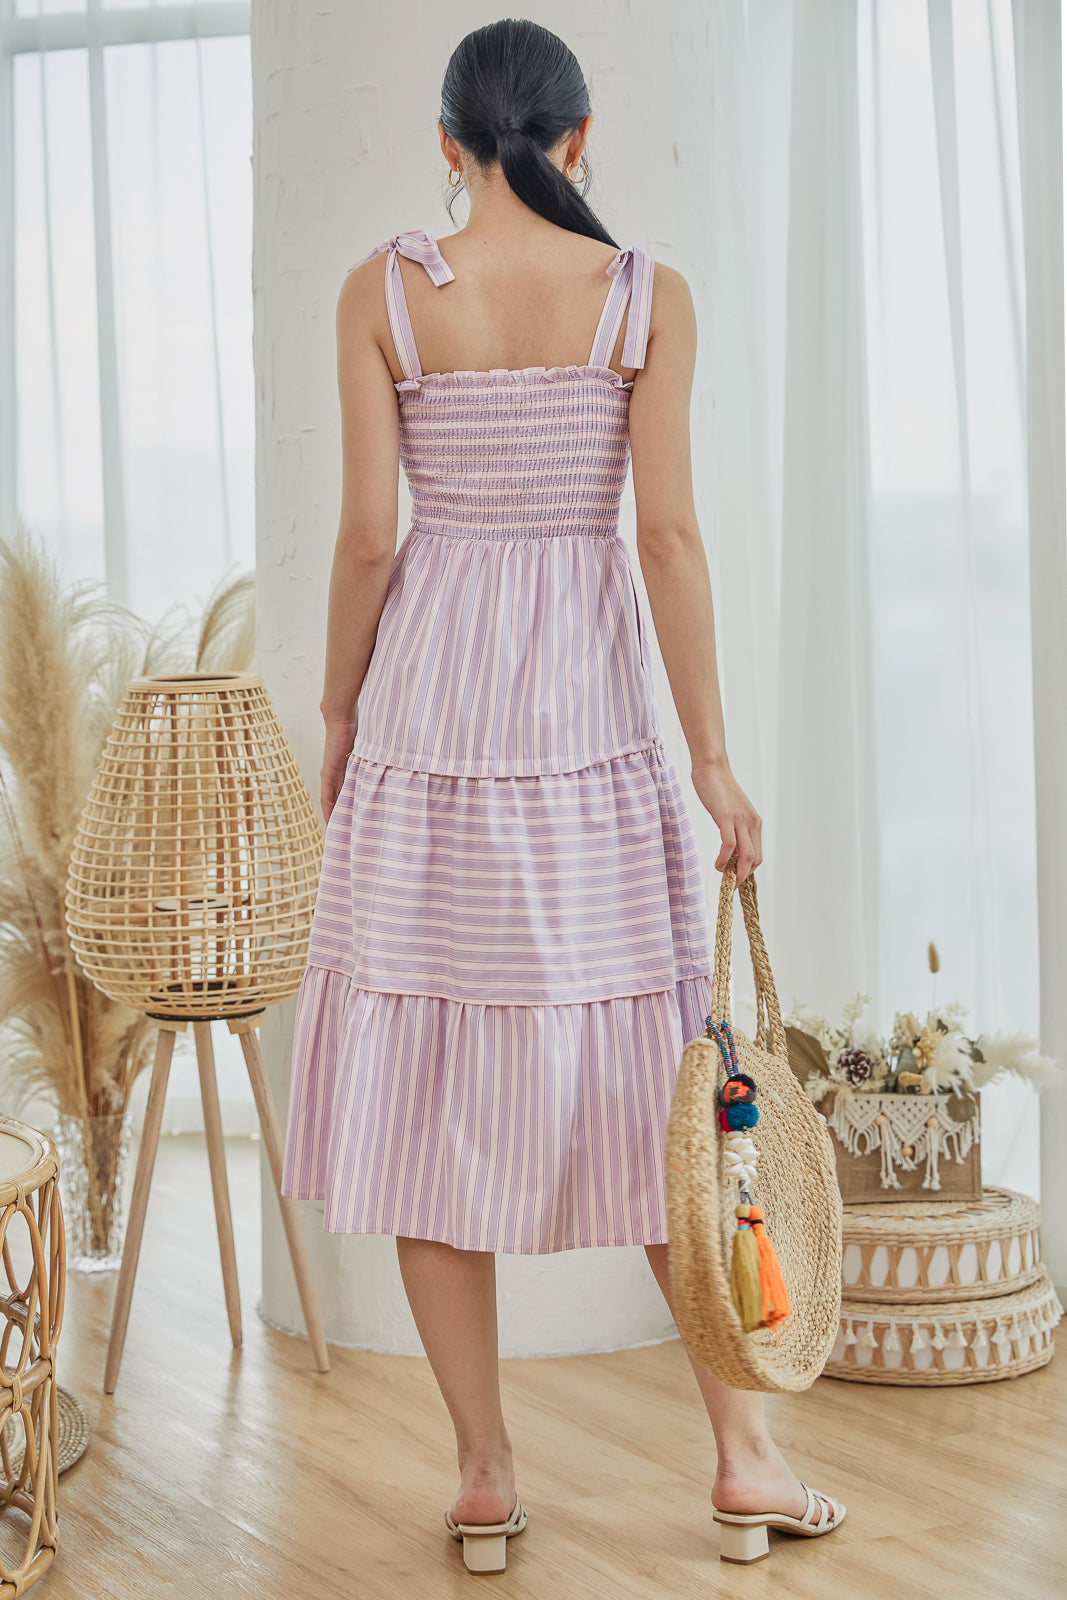 Amalfi Tie-Strap Smocked Dress in Pink Stripes